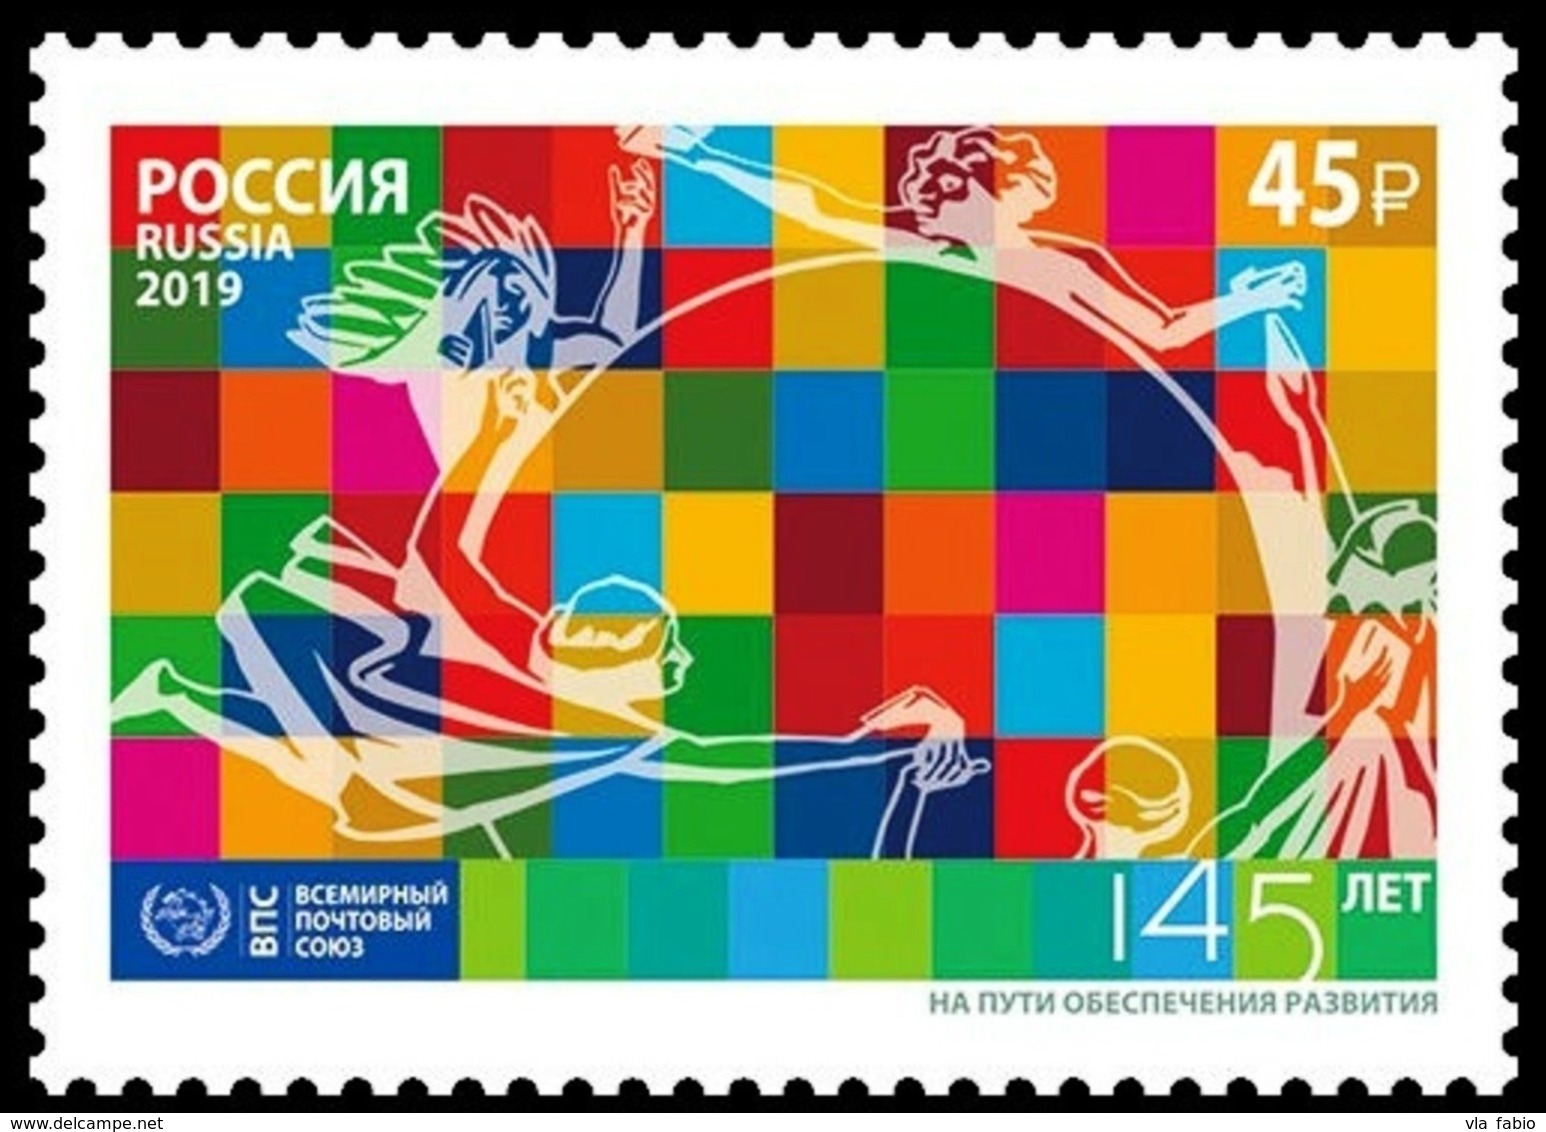 Russia 2019 RUSIA RUSSIE RUSSLAND  WORLD POST POSTALE Universal Postal Union Organization UPU 1 V MNH - Full Sheets